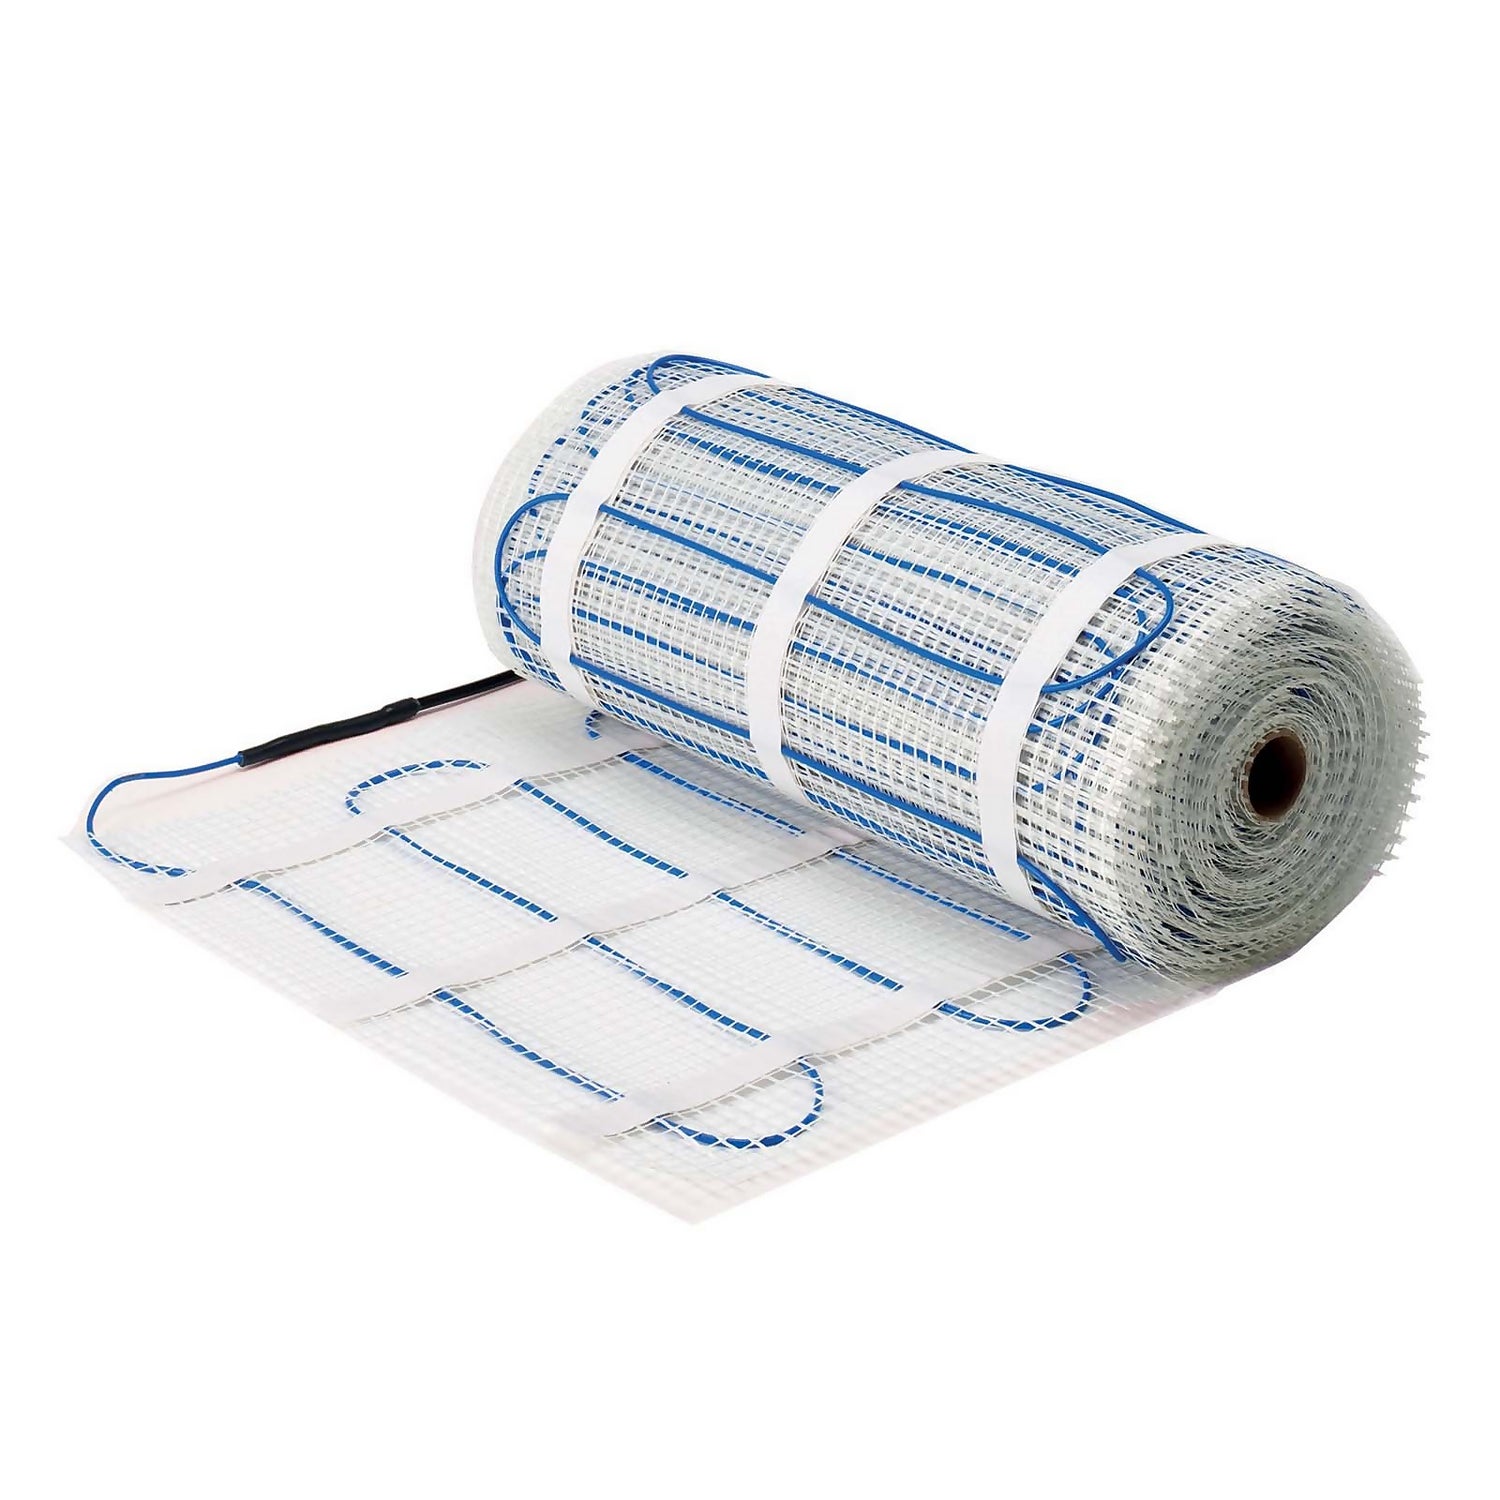 Heat Mat Underfloor Heating Kit with Insulation - 1.5m